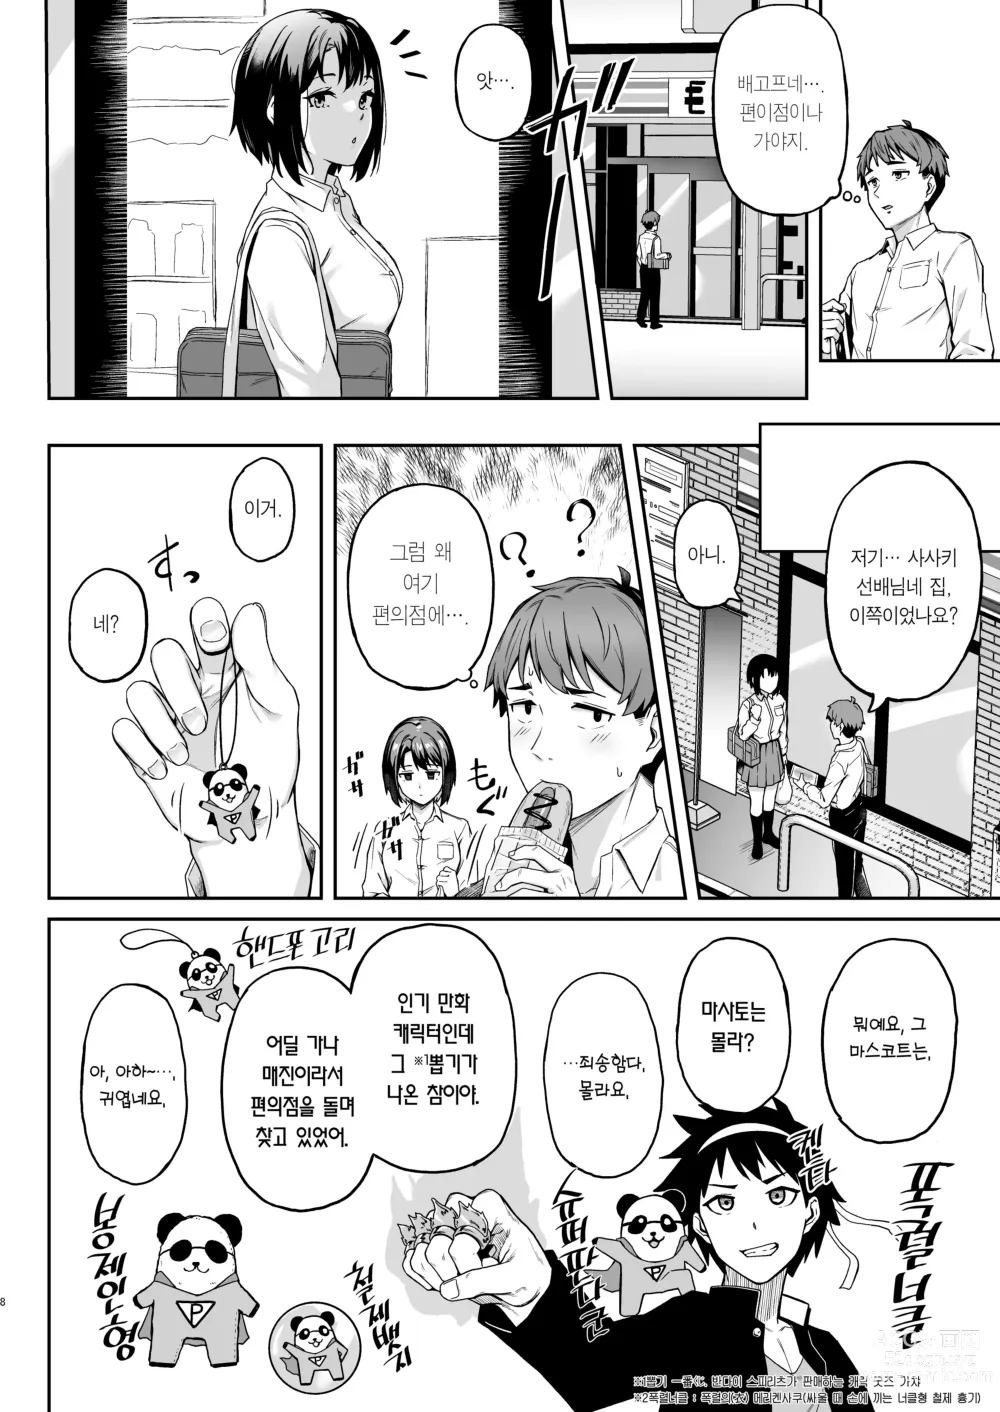 Page 7 of doujinshi 그저 슬픈 척을 한다